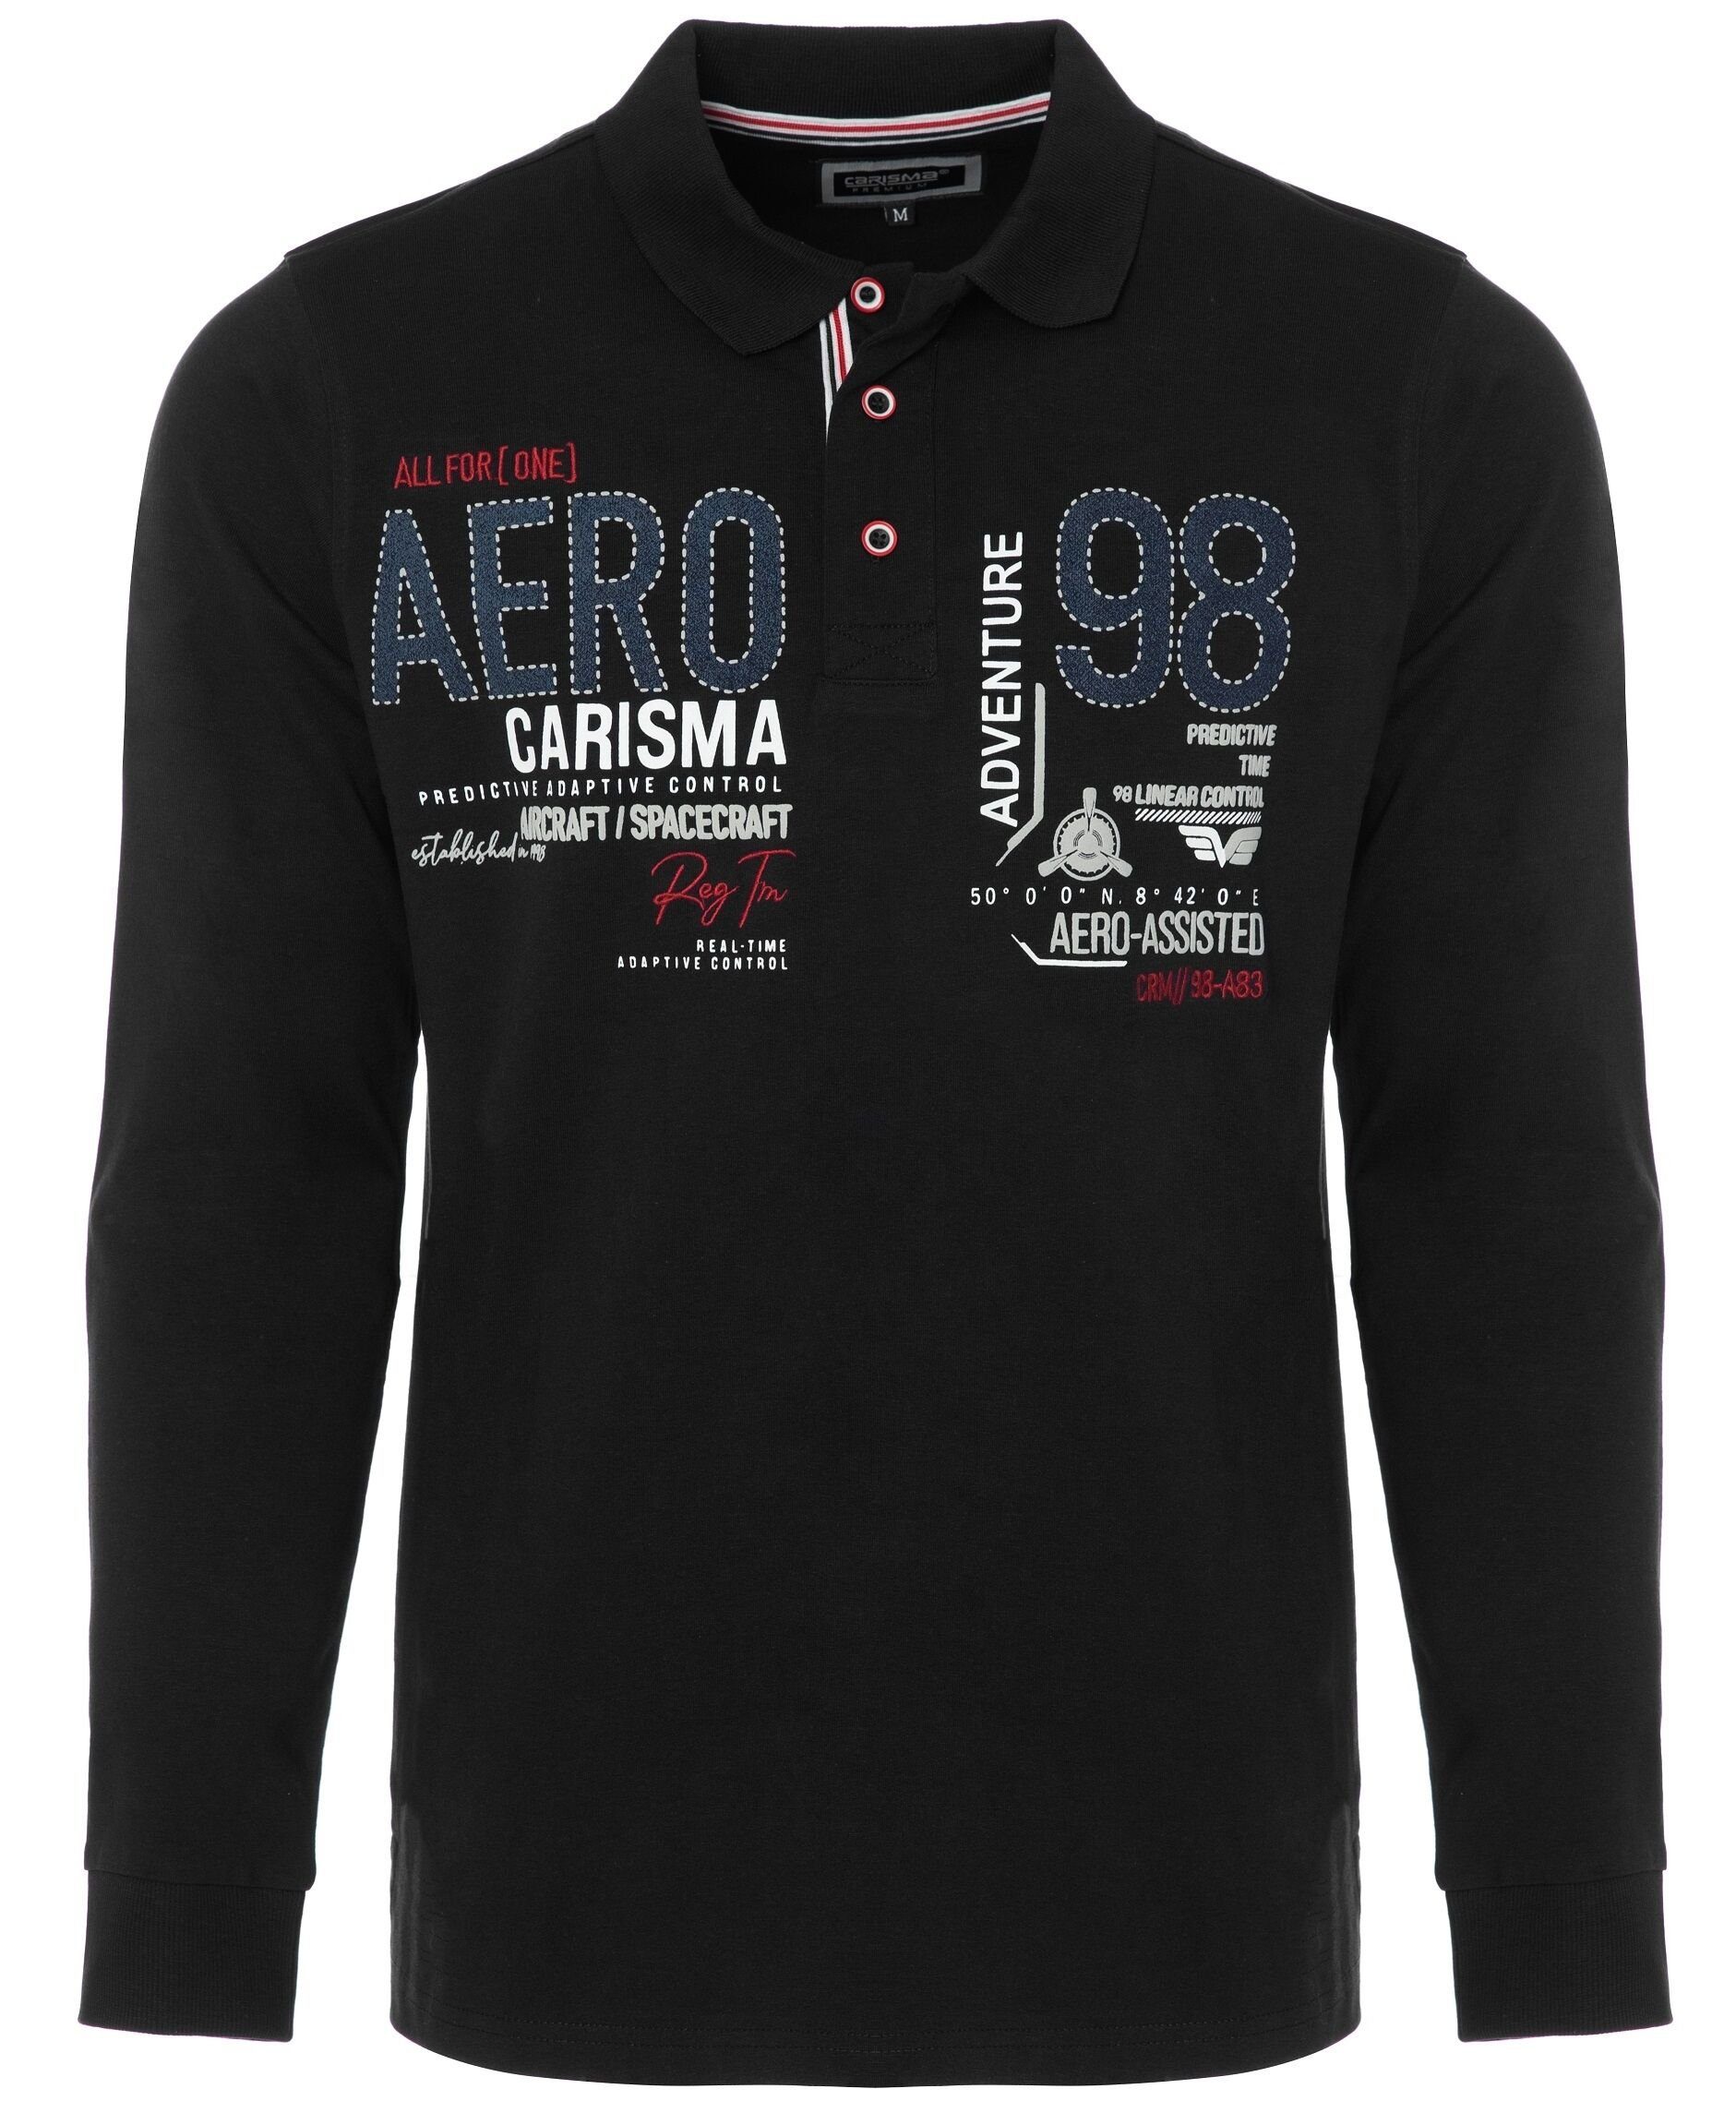 CARISMA Poloshirt Premium Black Langarmpolo